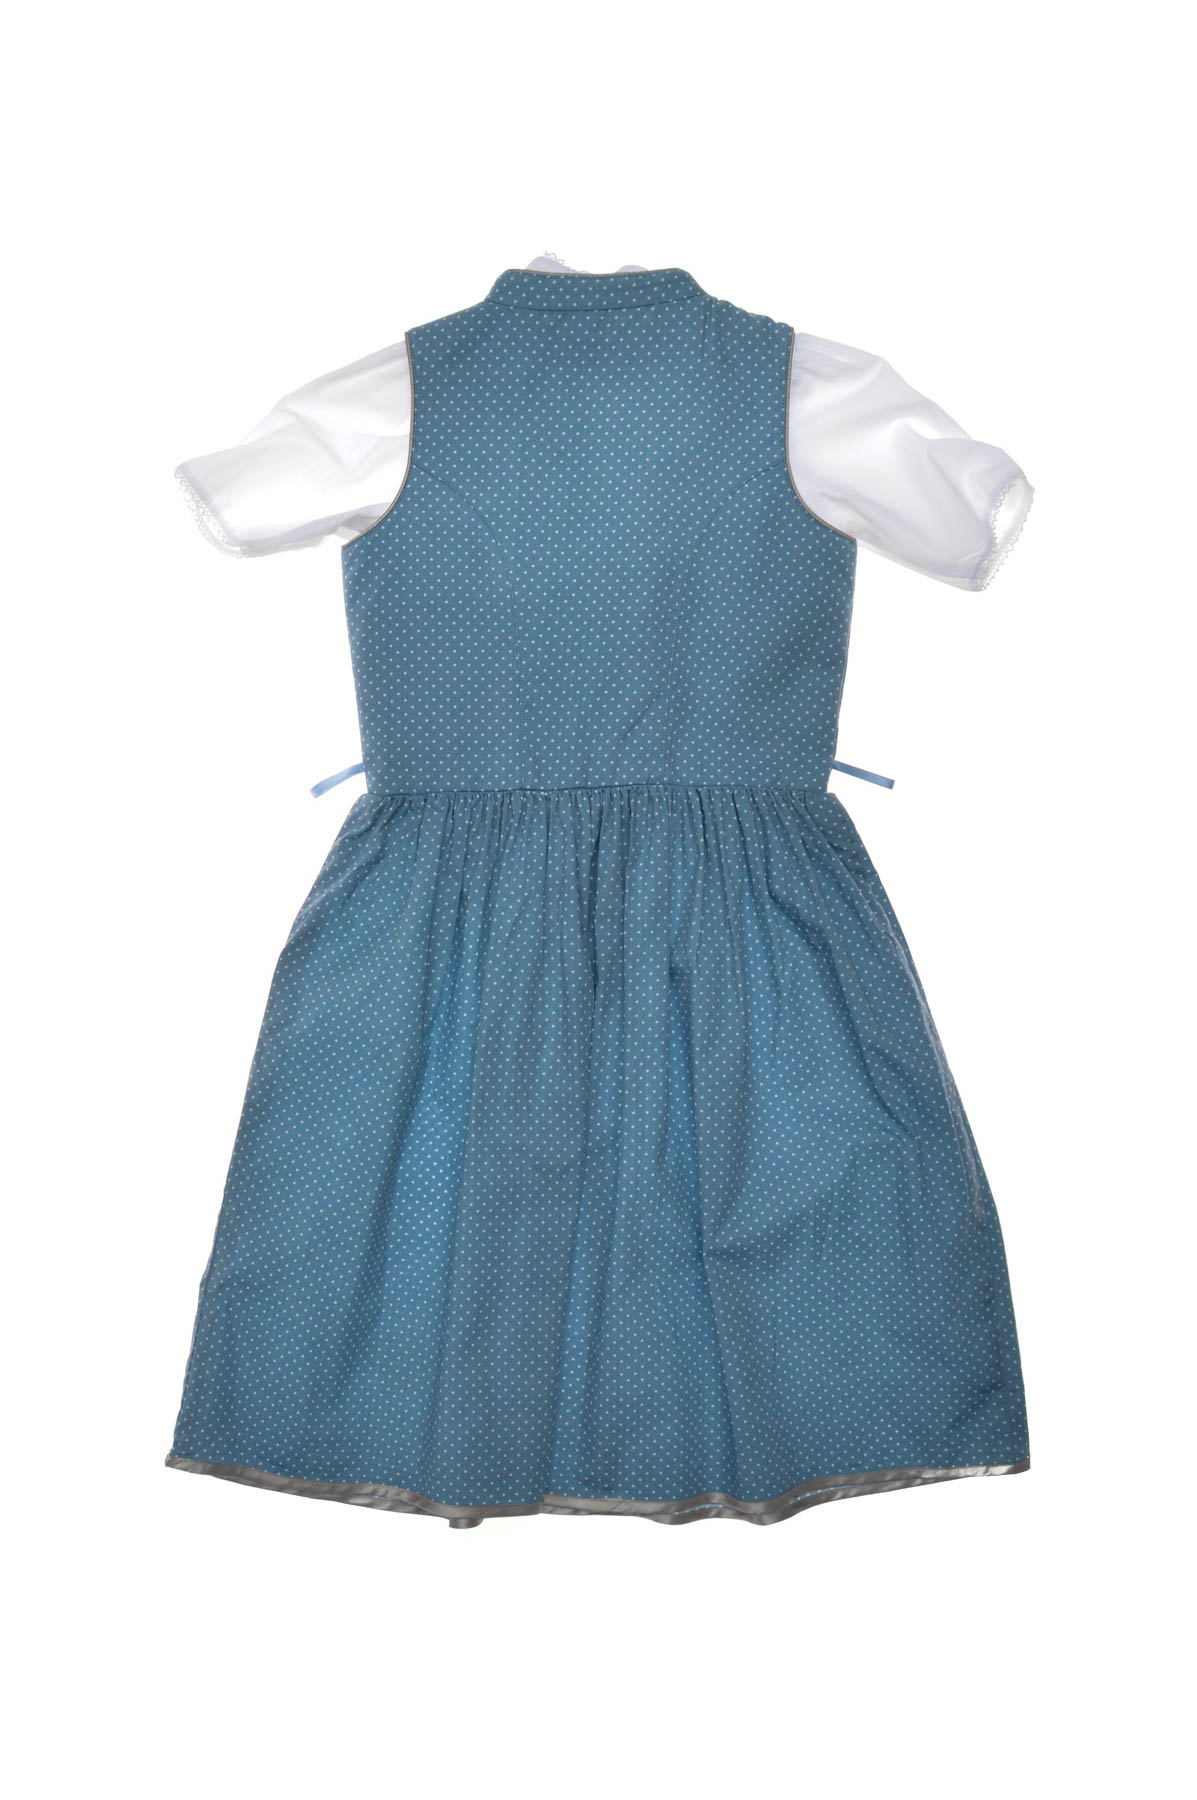 Child's dress - STOCKERPOIN - 1